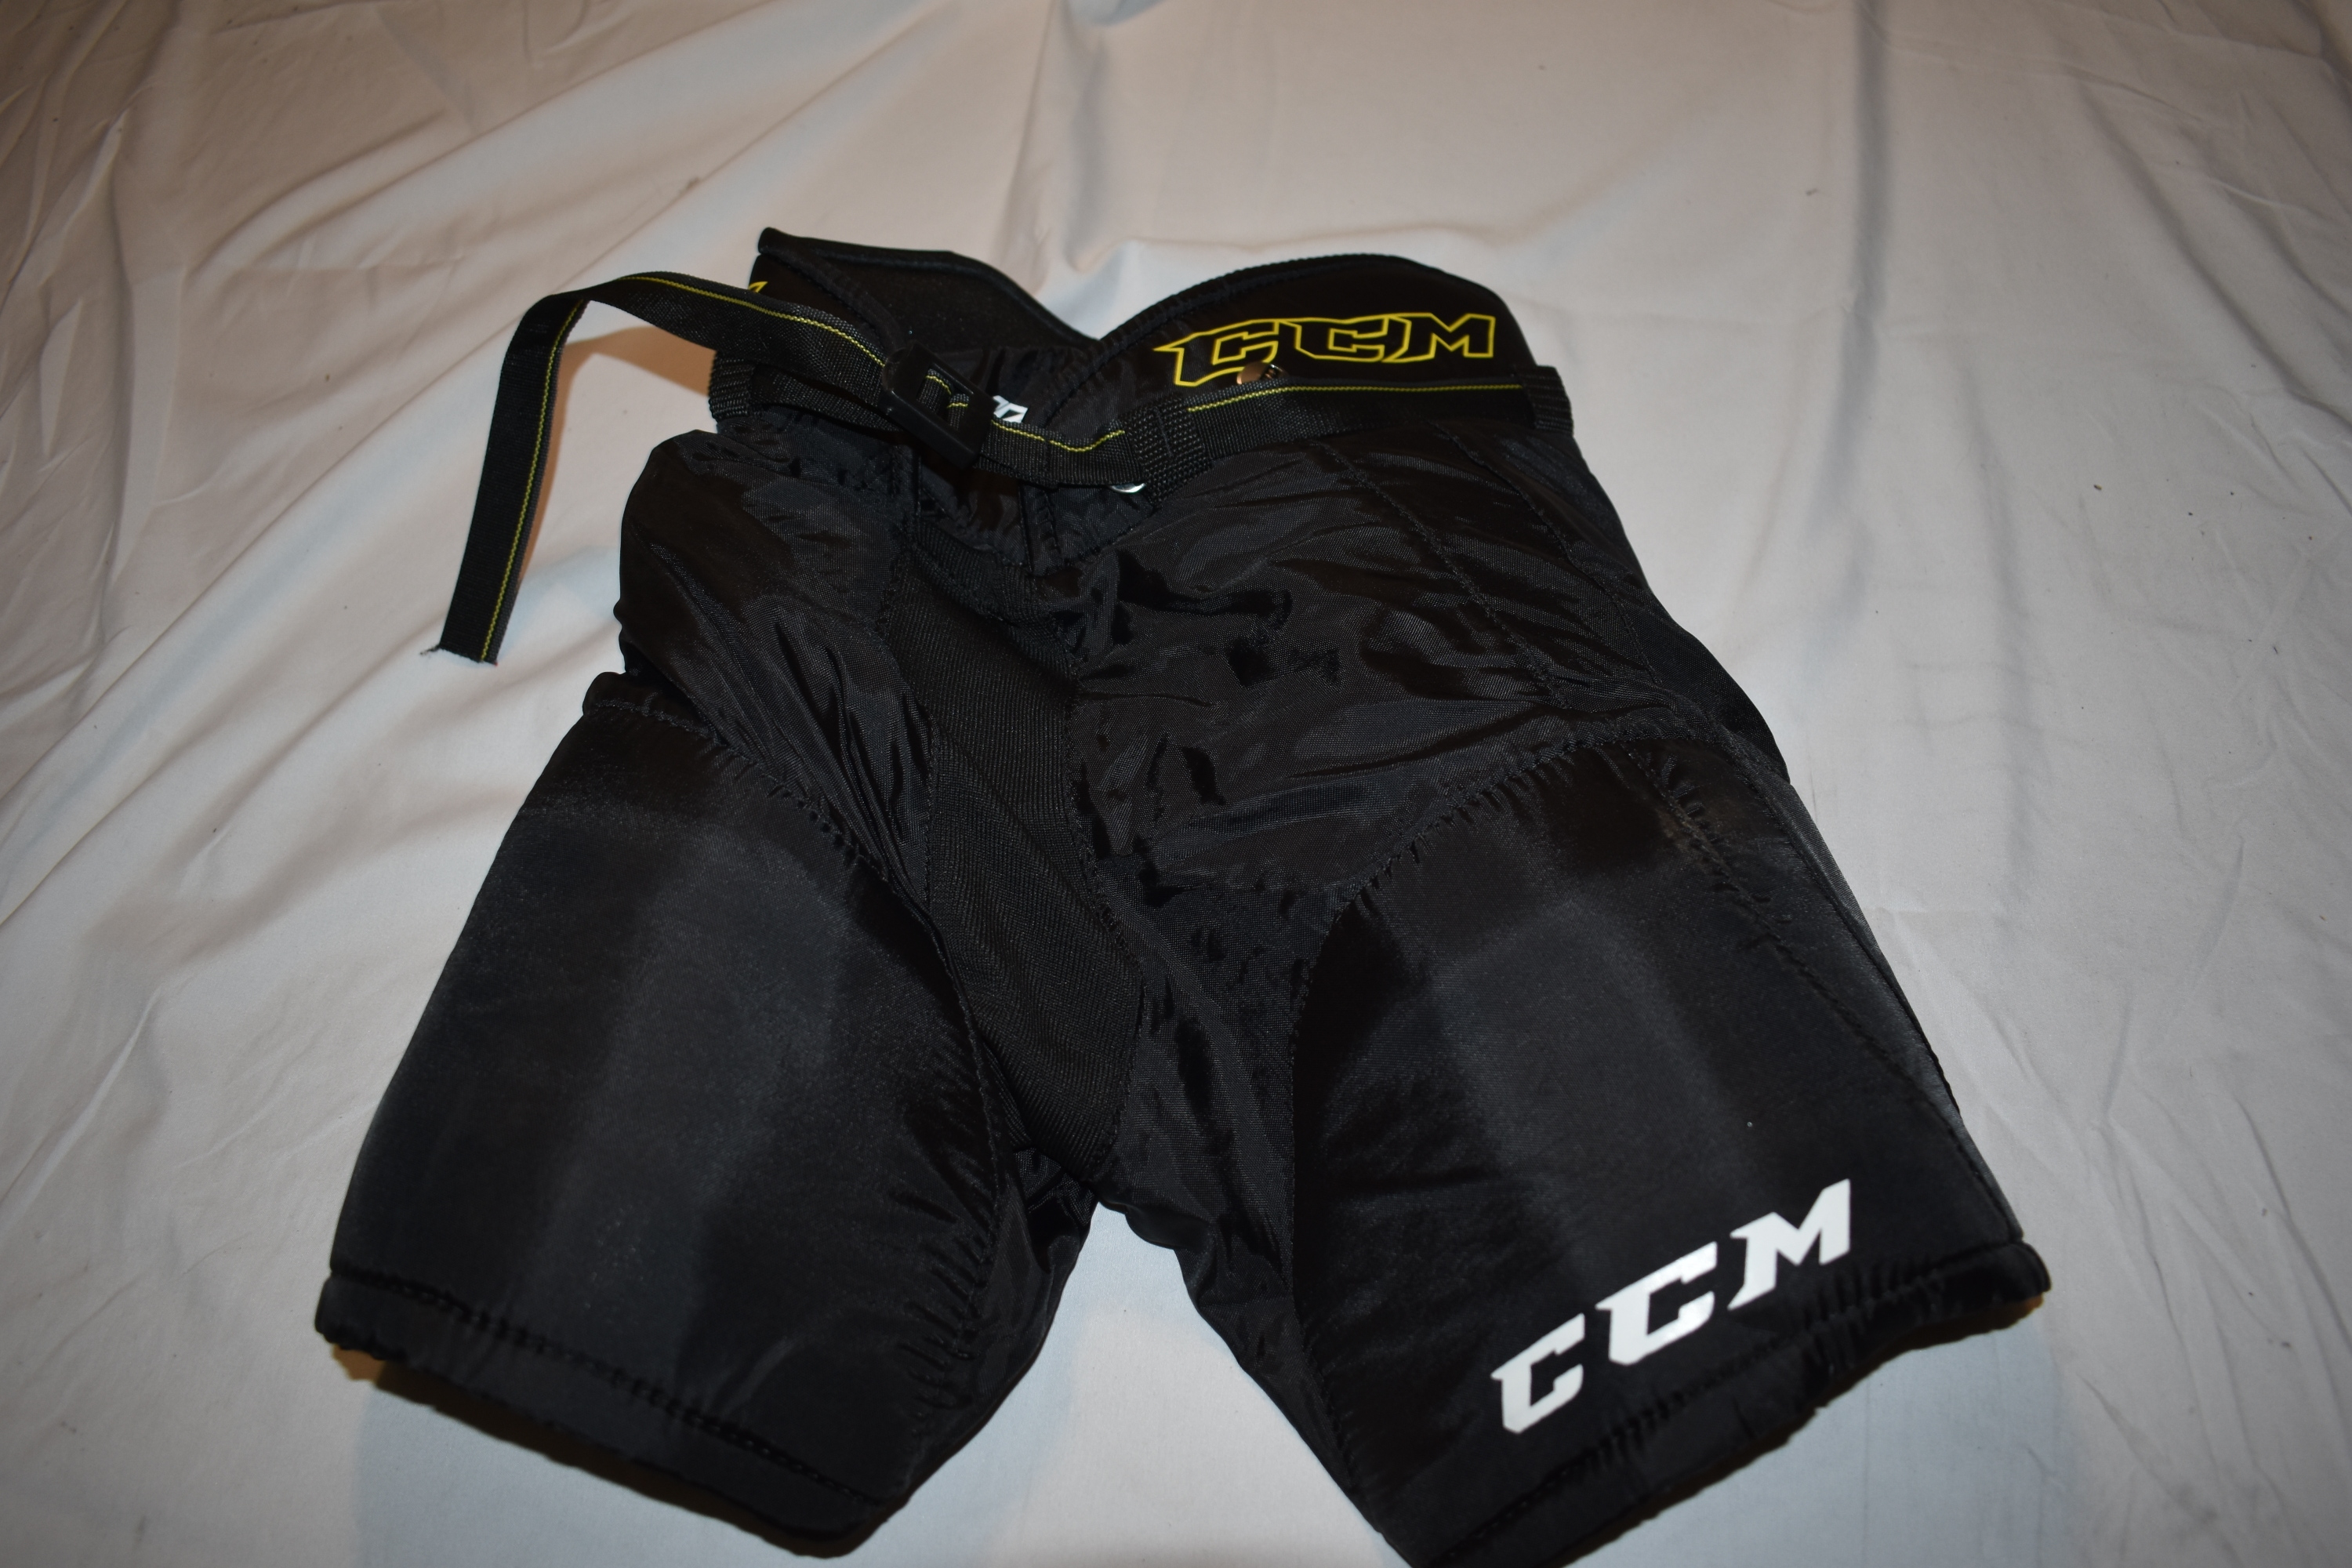 CCM Tacks Hockey Pants, Black, Youth Medium - Great Condition!